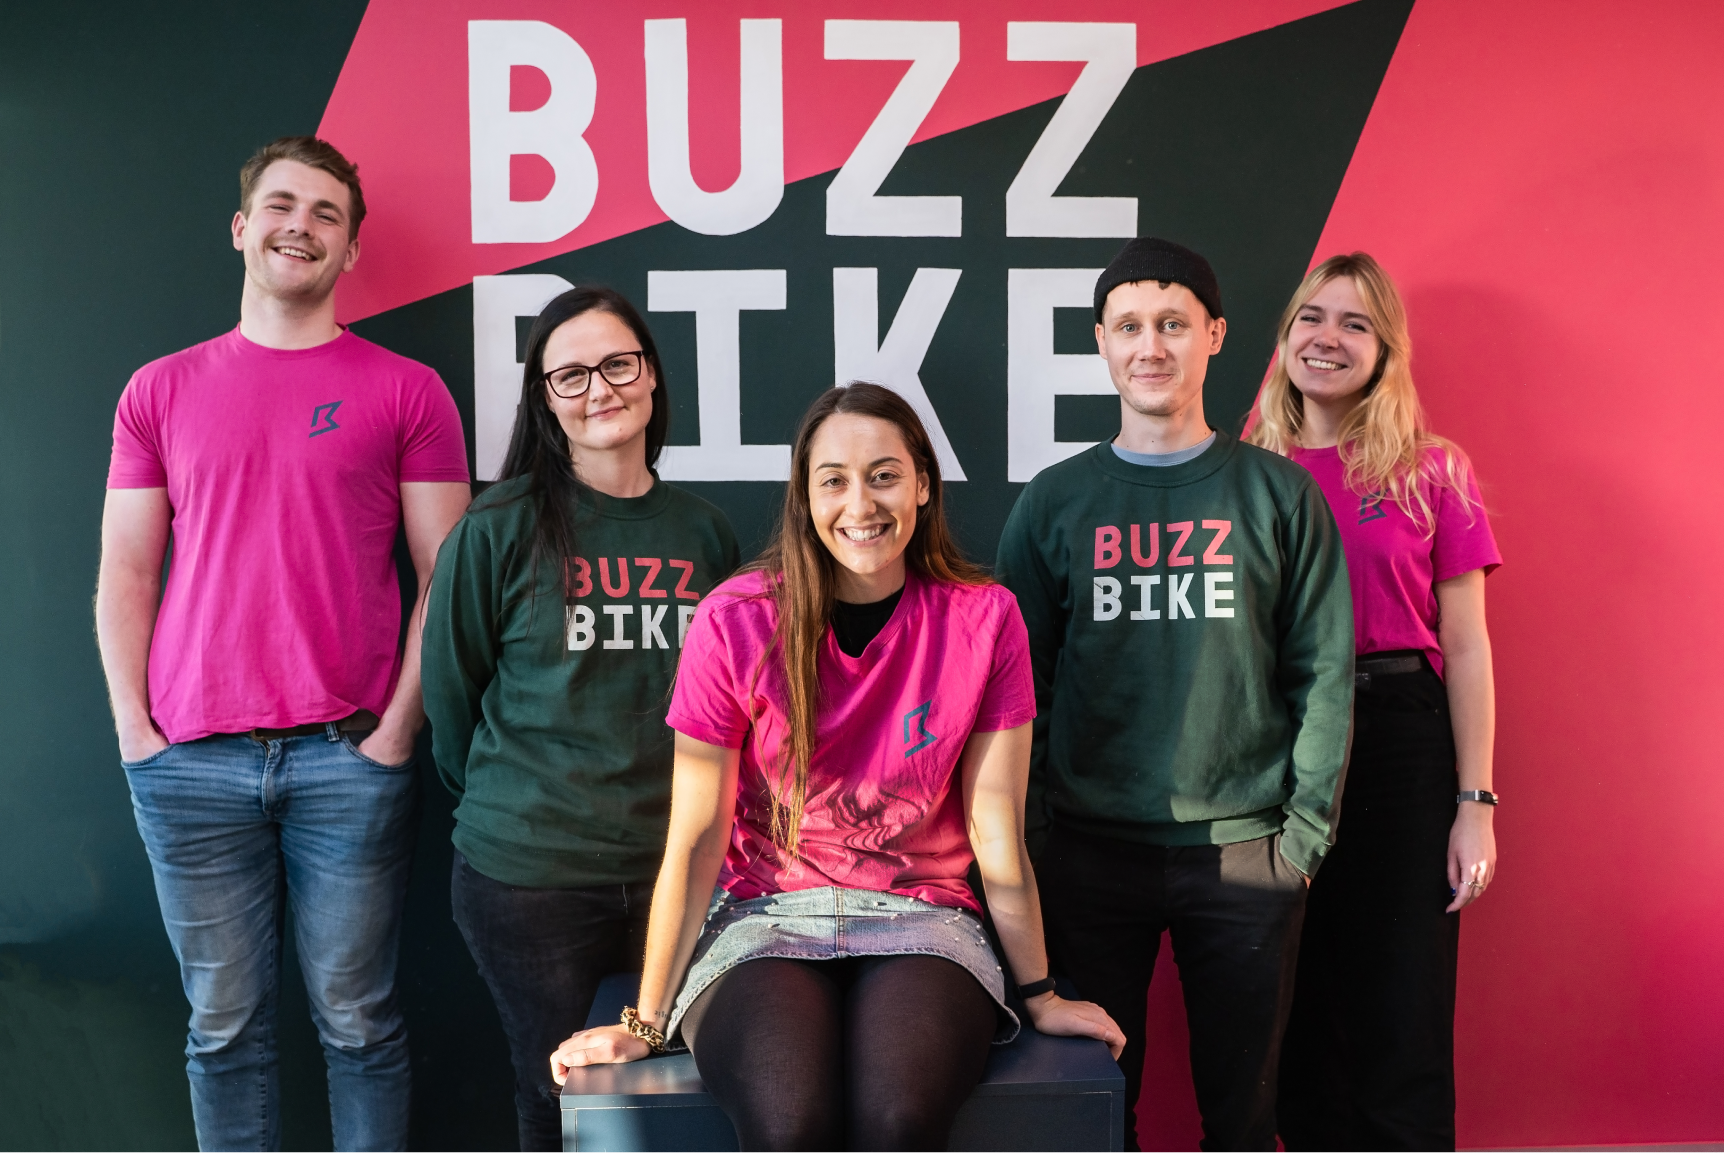 Buzzbike team